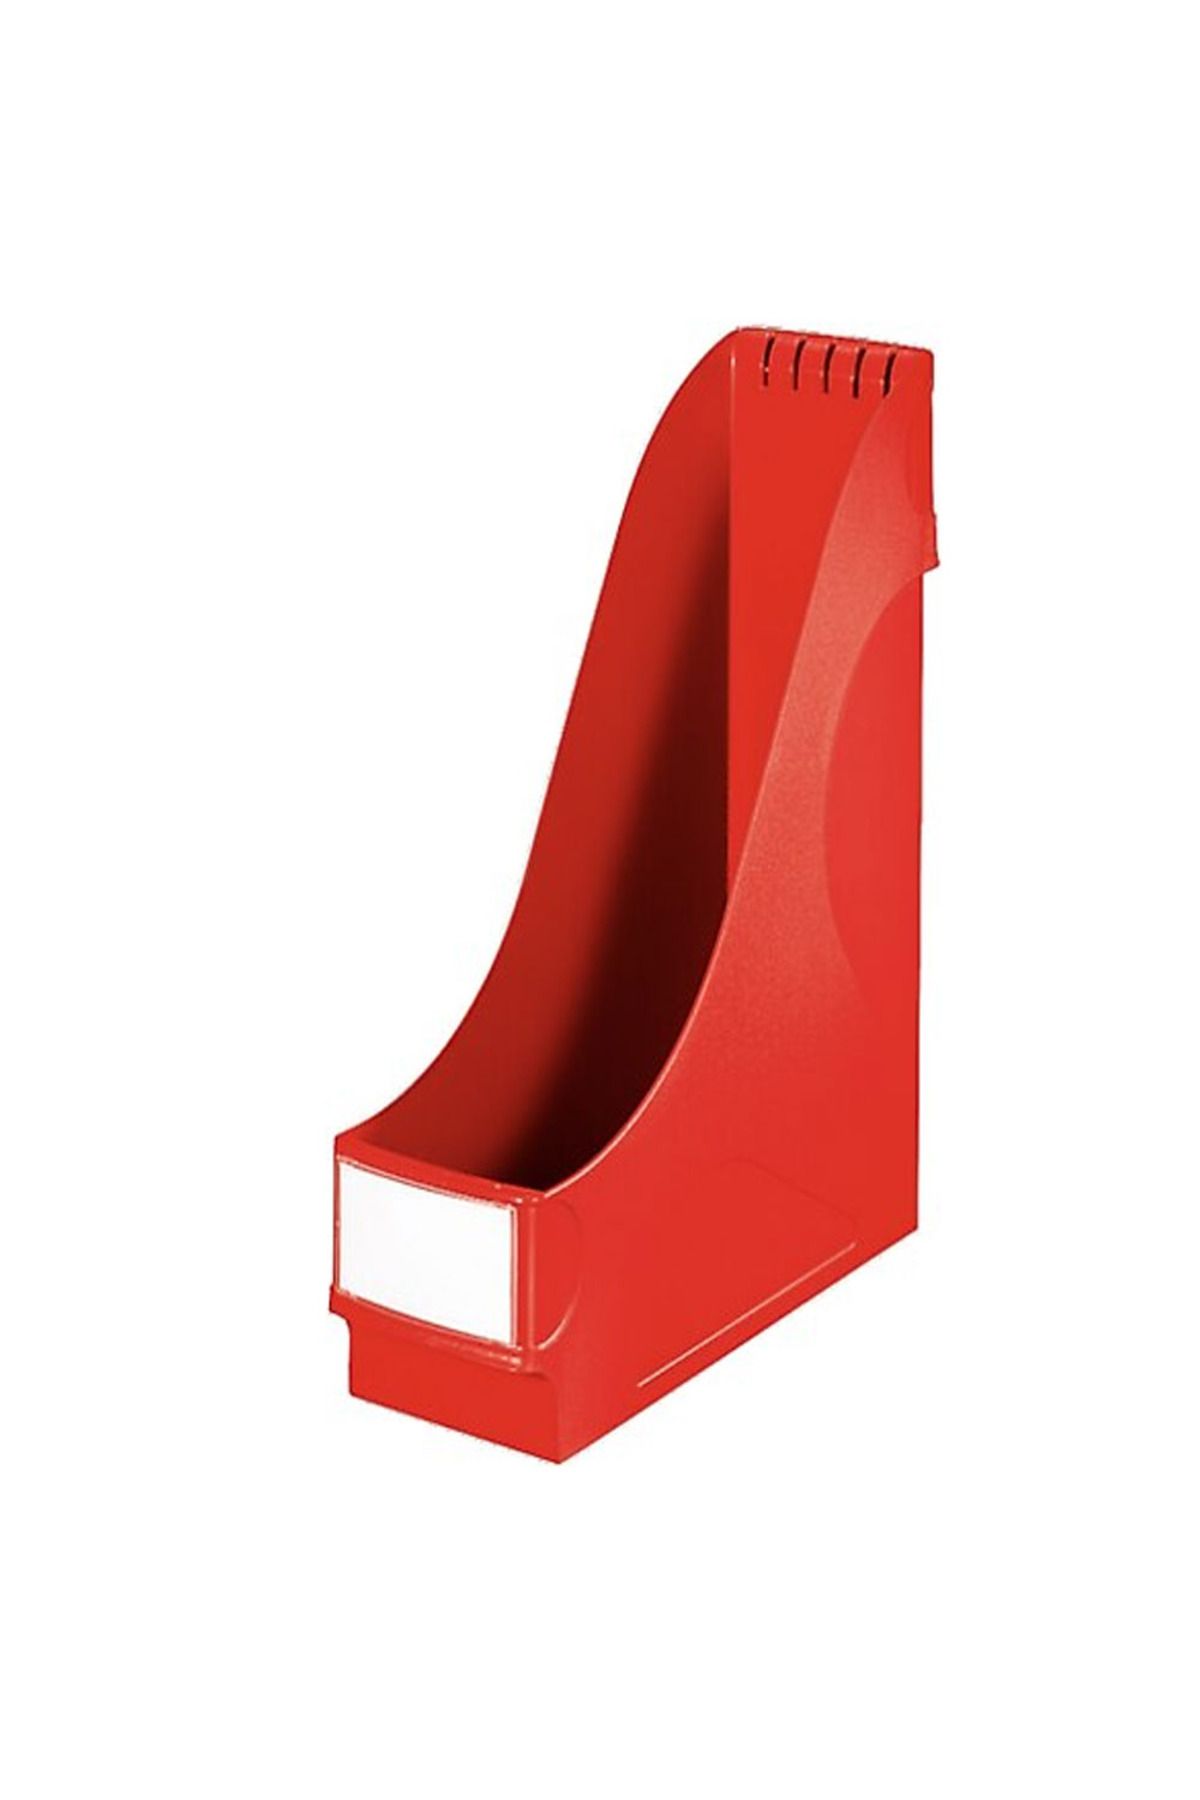 Leitz Kutu Klasör (MAGAZİNLİK) Plastik 9.8x31.8x29.1 Kırmızı 2425t-8-lı